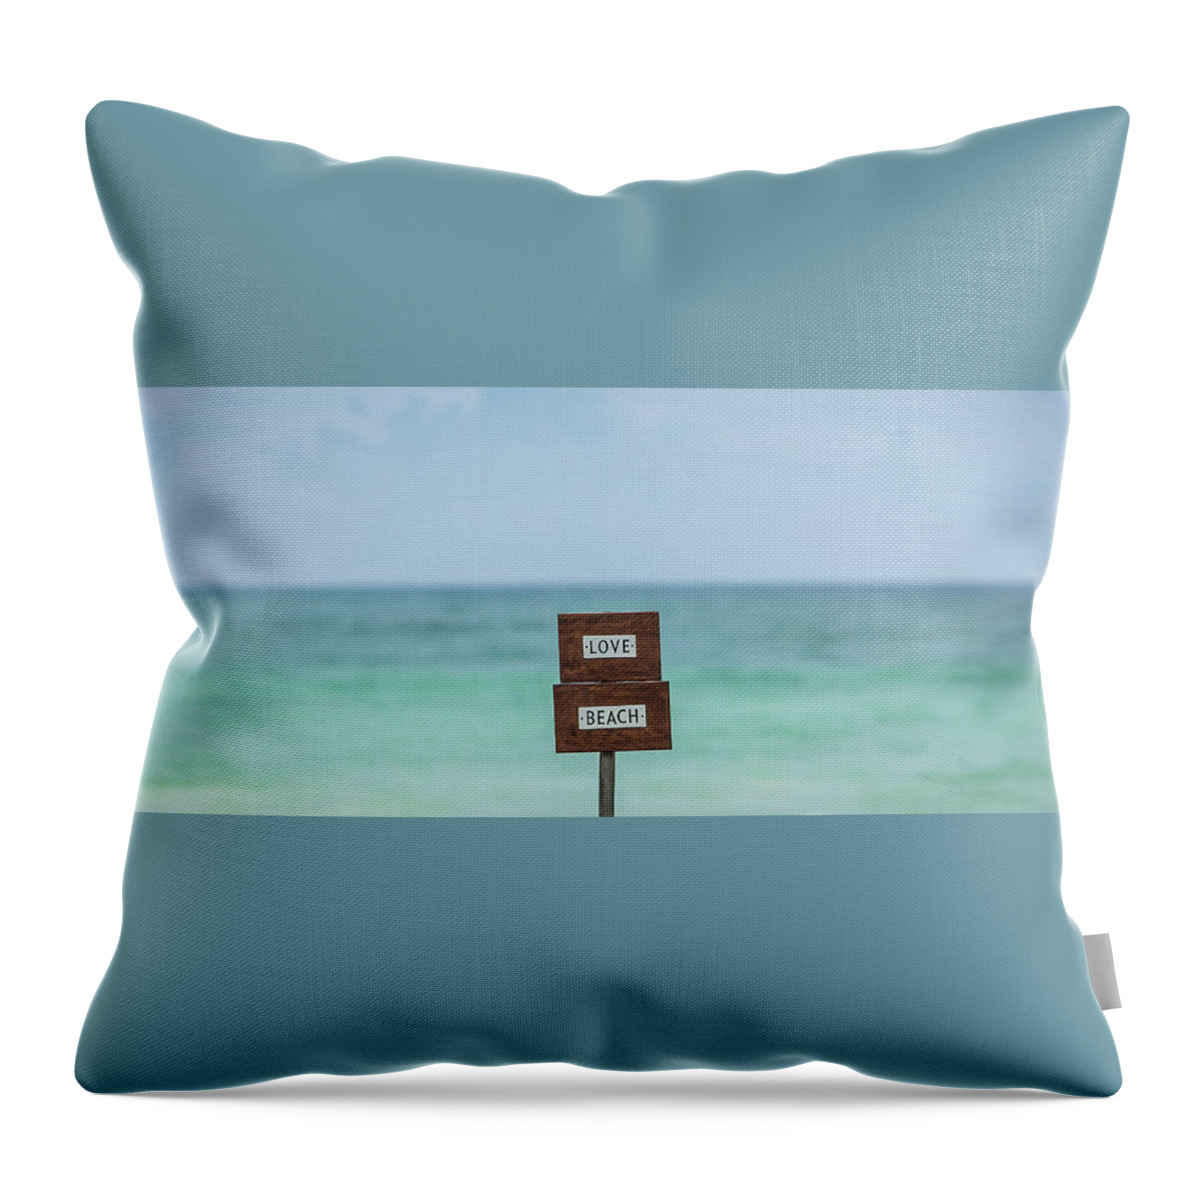 Tulum Throw Pillow featuring the photograph Love Beach Tulum, Mexico by Julieta Belmont